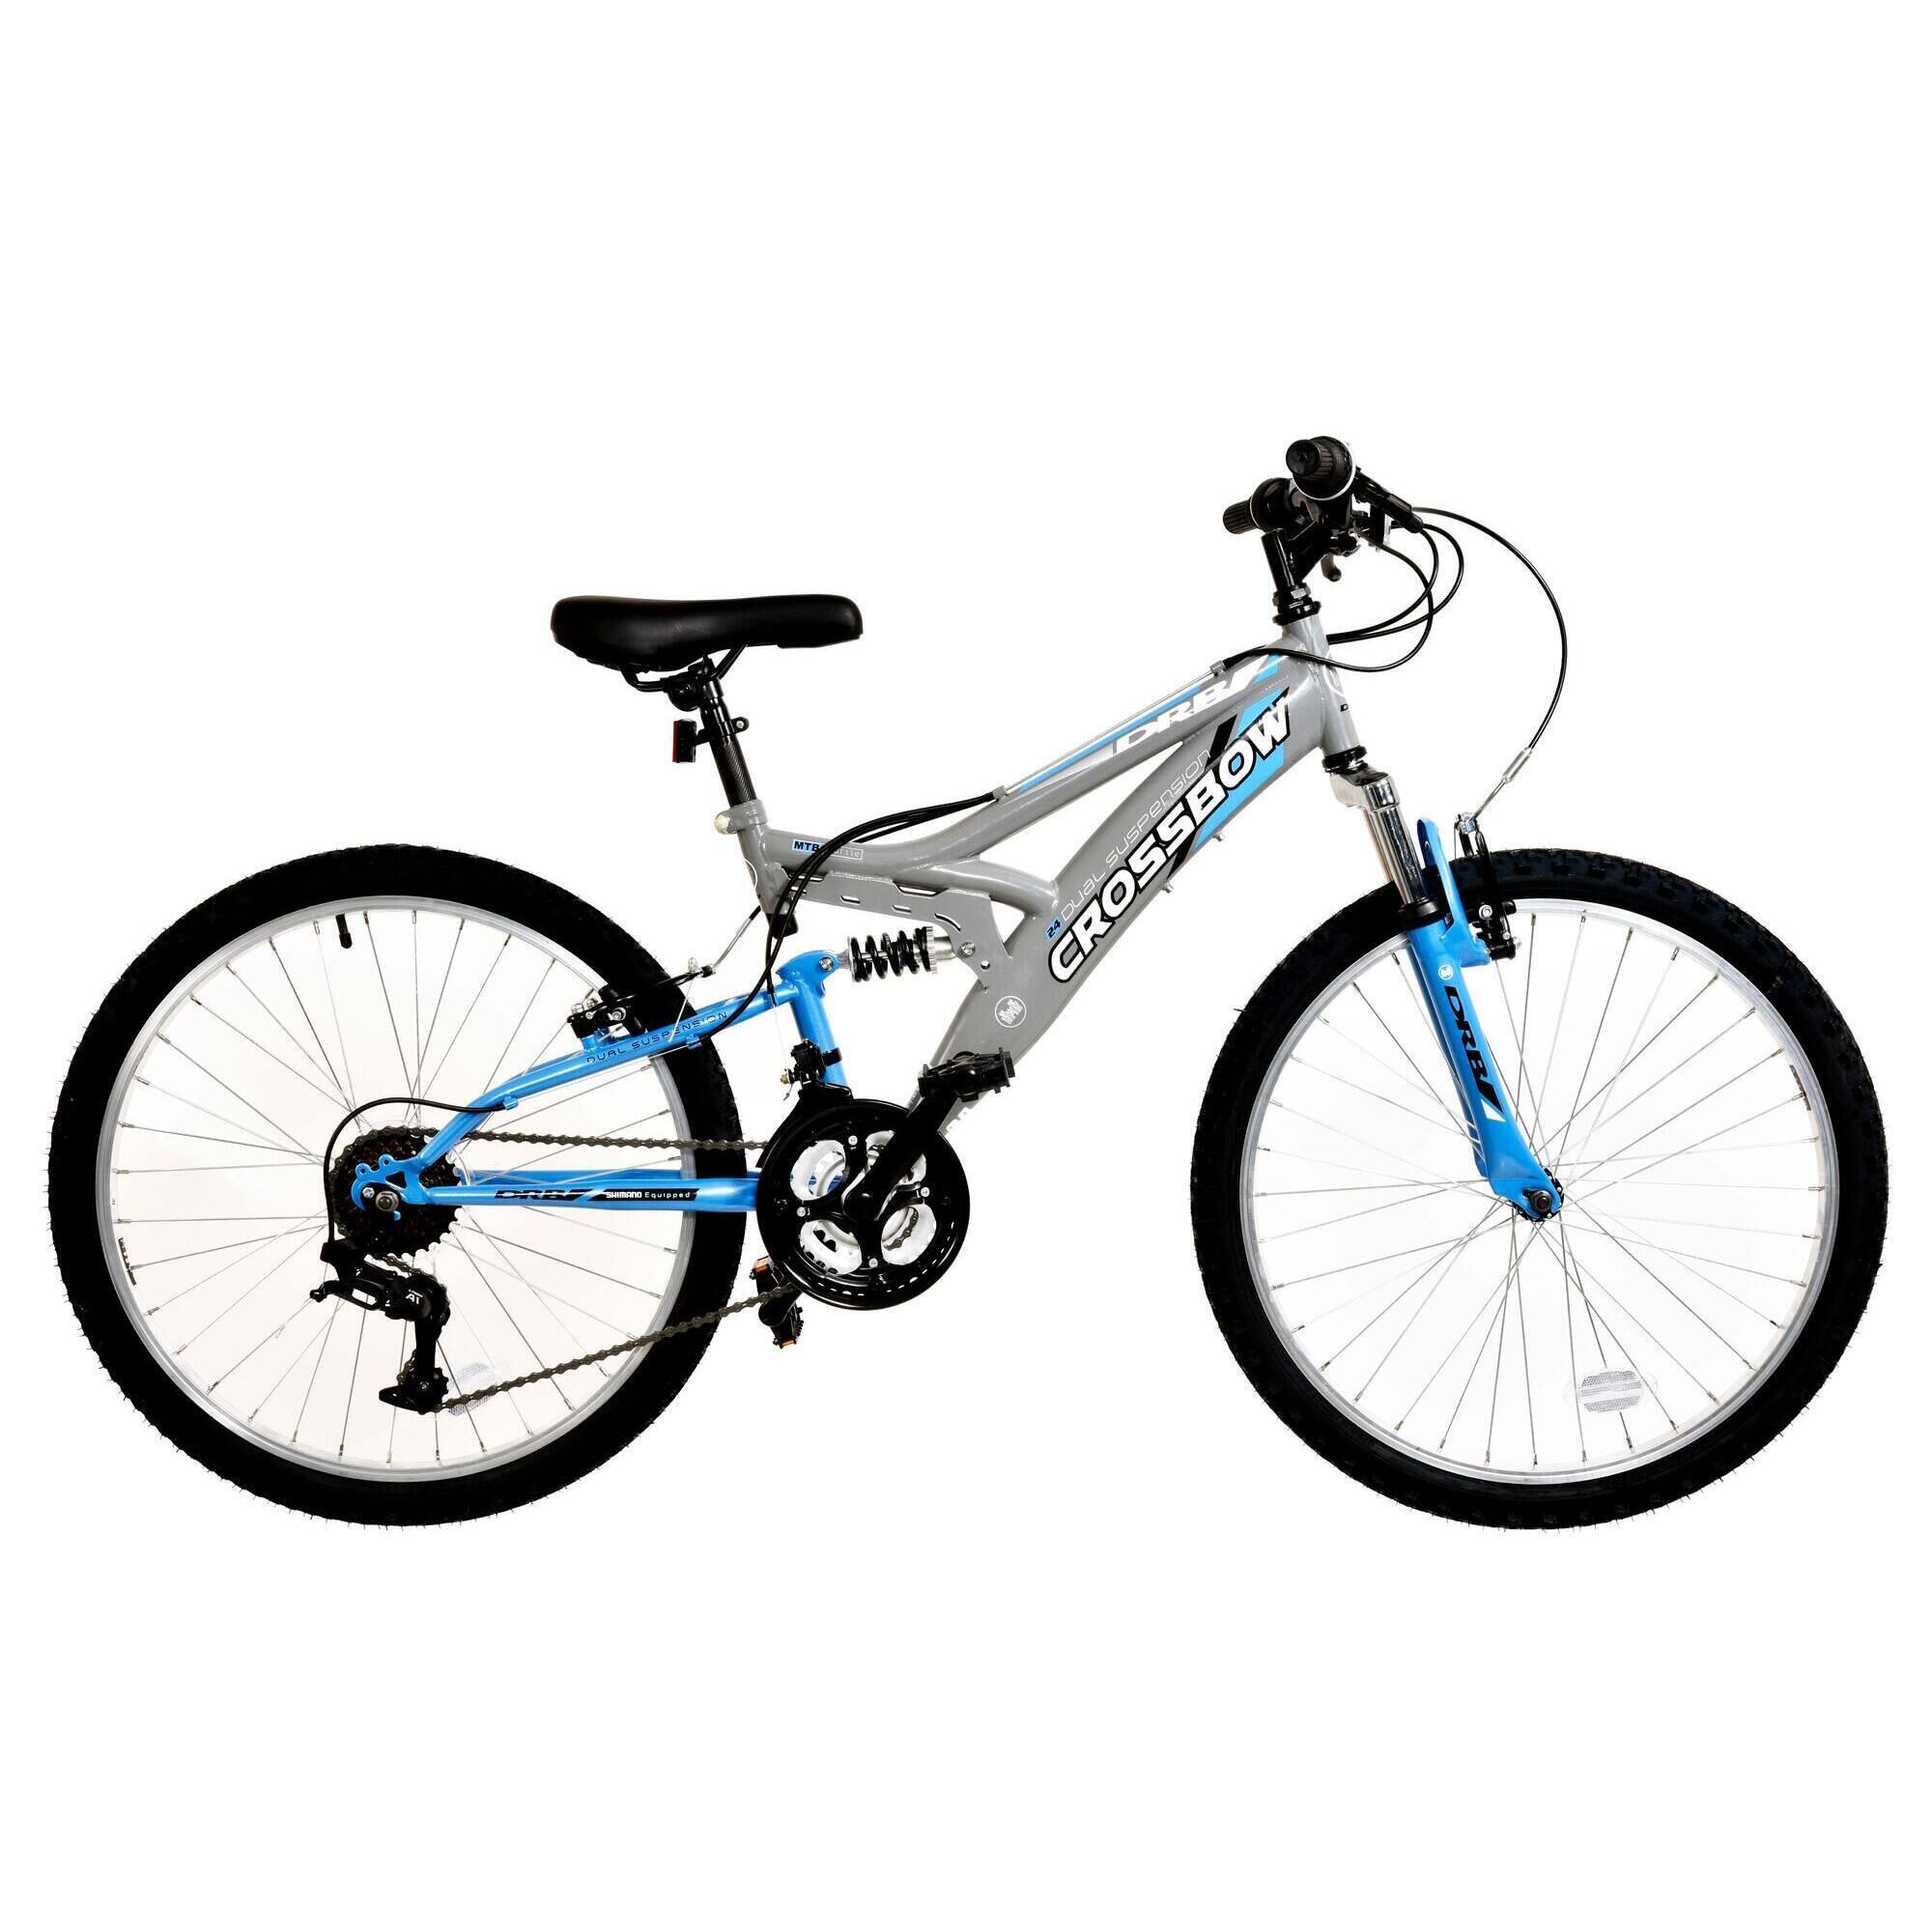 DALLINGRIDGE Dallingridge Crossbow Jr. Full Suspension Mountain Bike, 24In Wheel - Grey/Blue